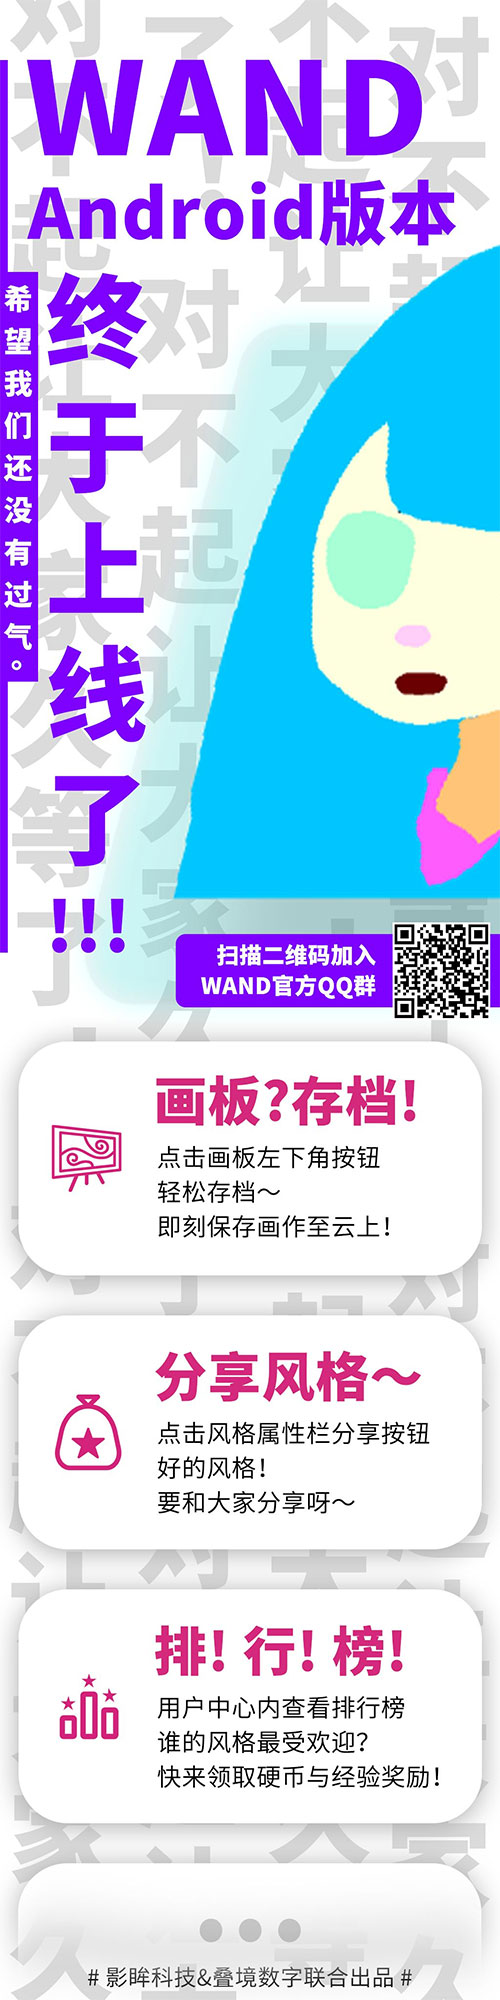 《WAND》12月30日安卓版本即将上线！